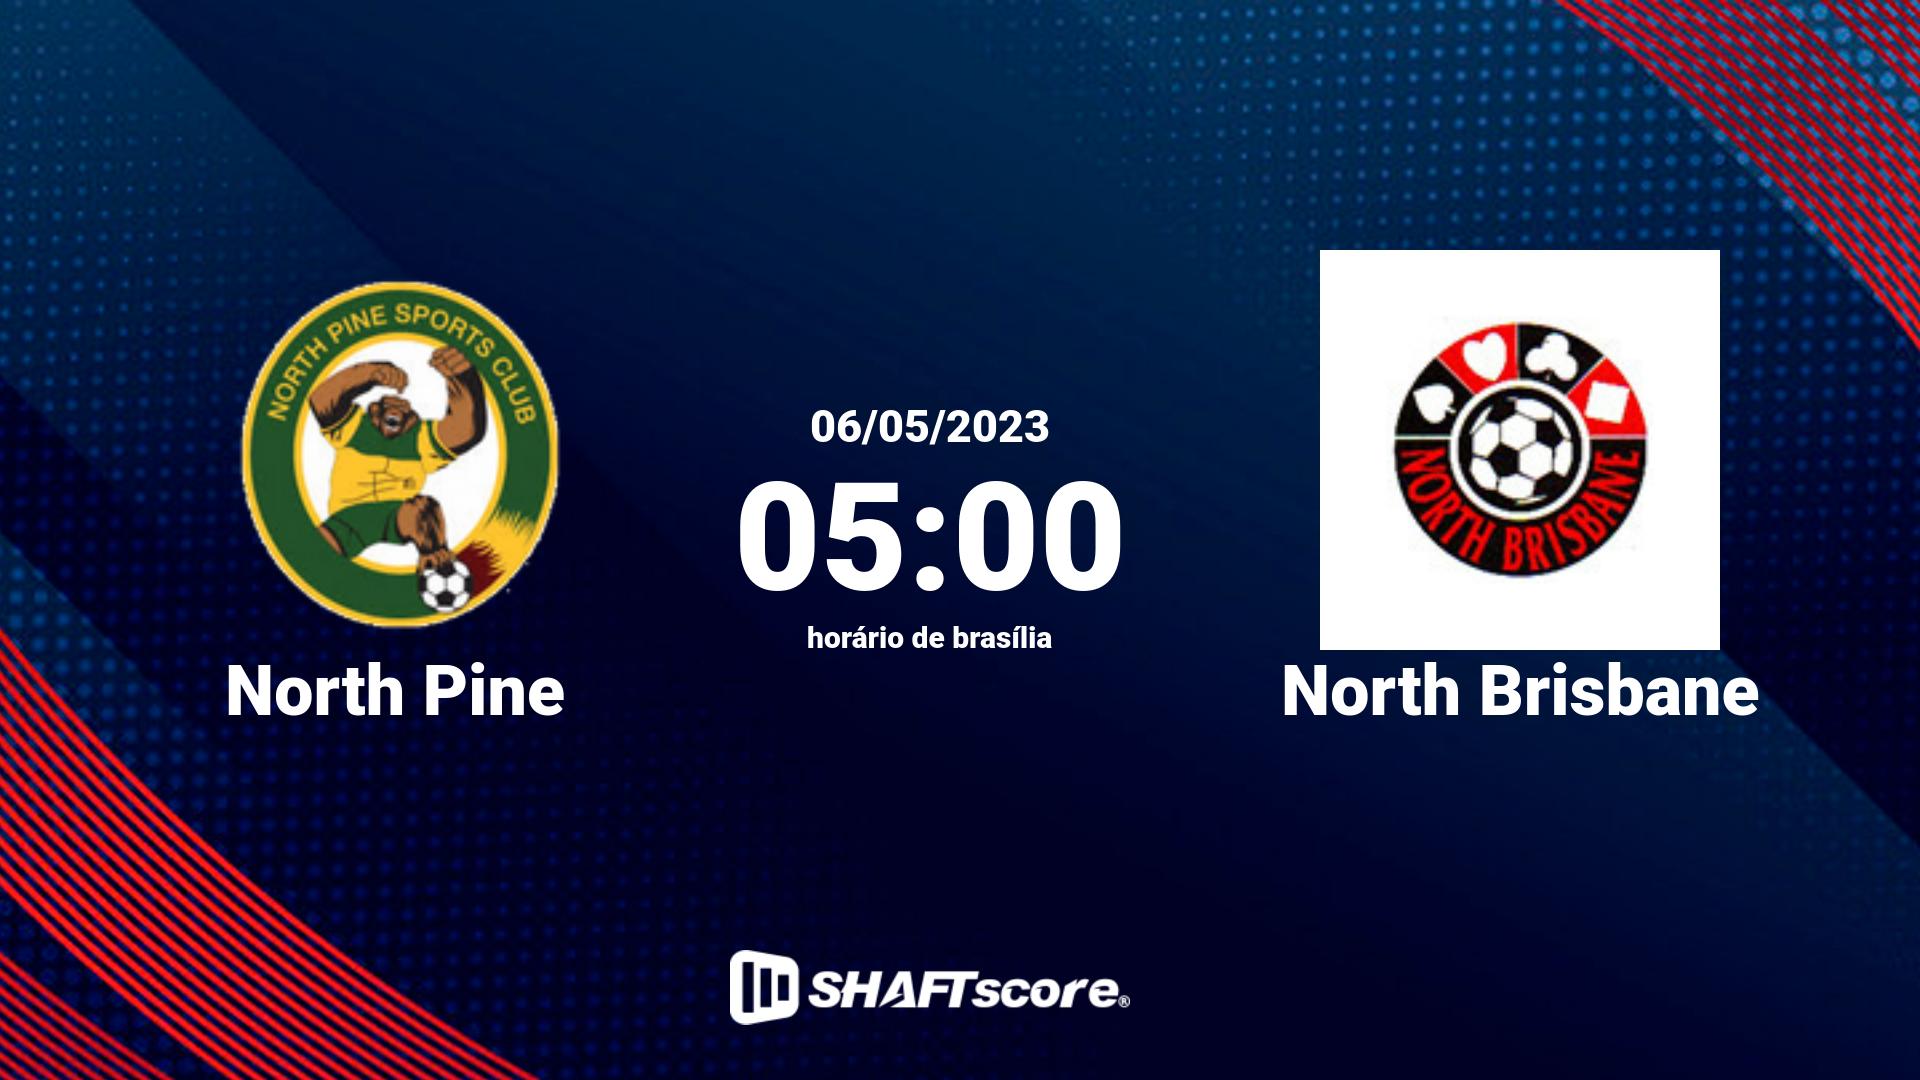 Estatísticas do jogo North Pine vs North Brisbane 06.05 05:00